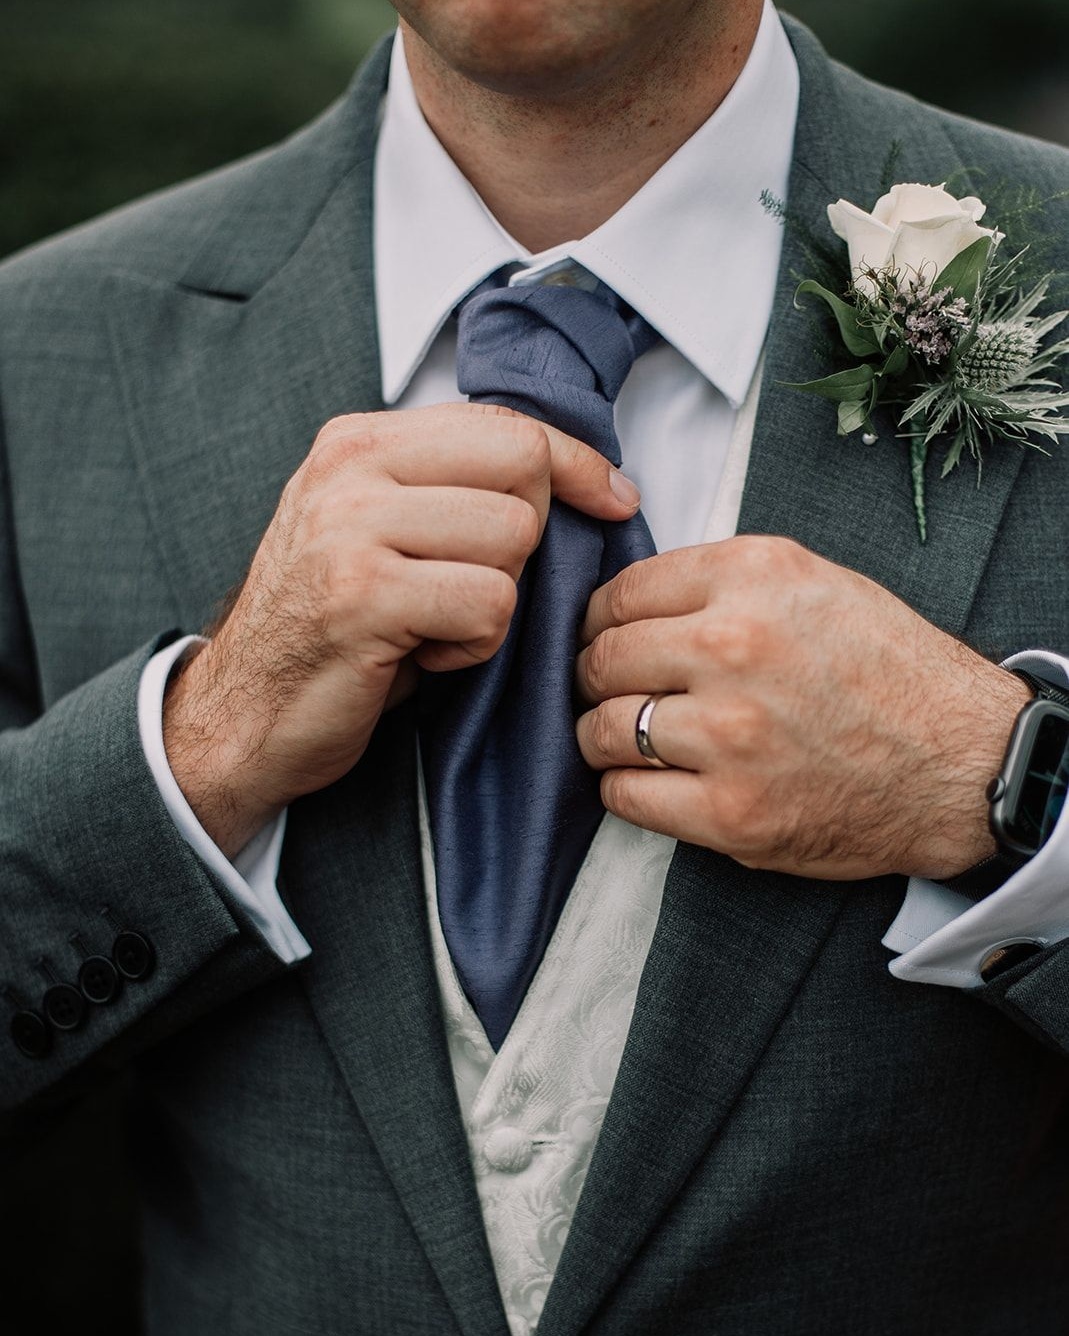 Tie - Groom Accessory for formal look